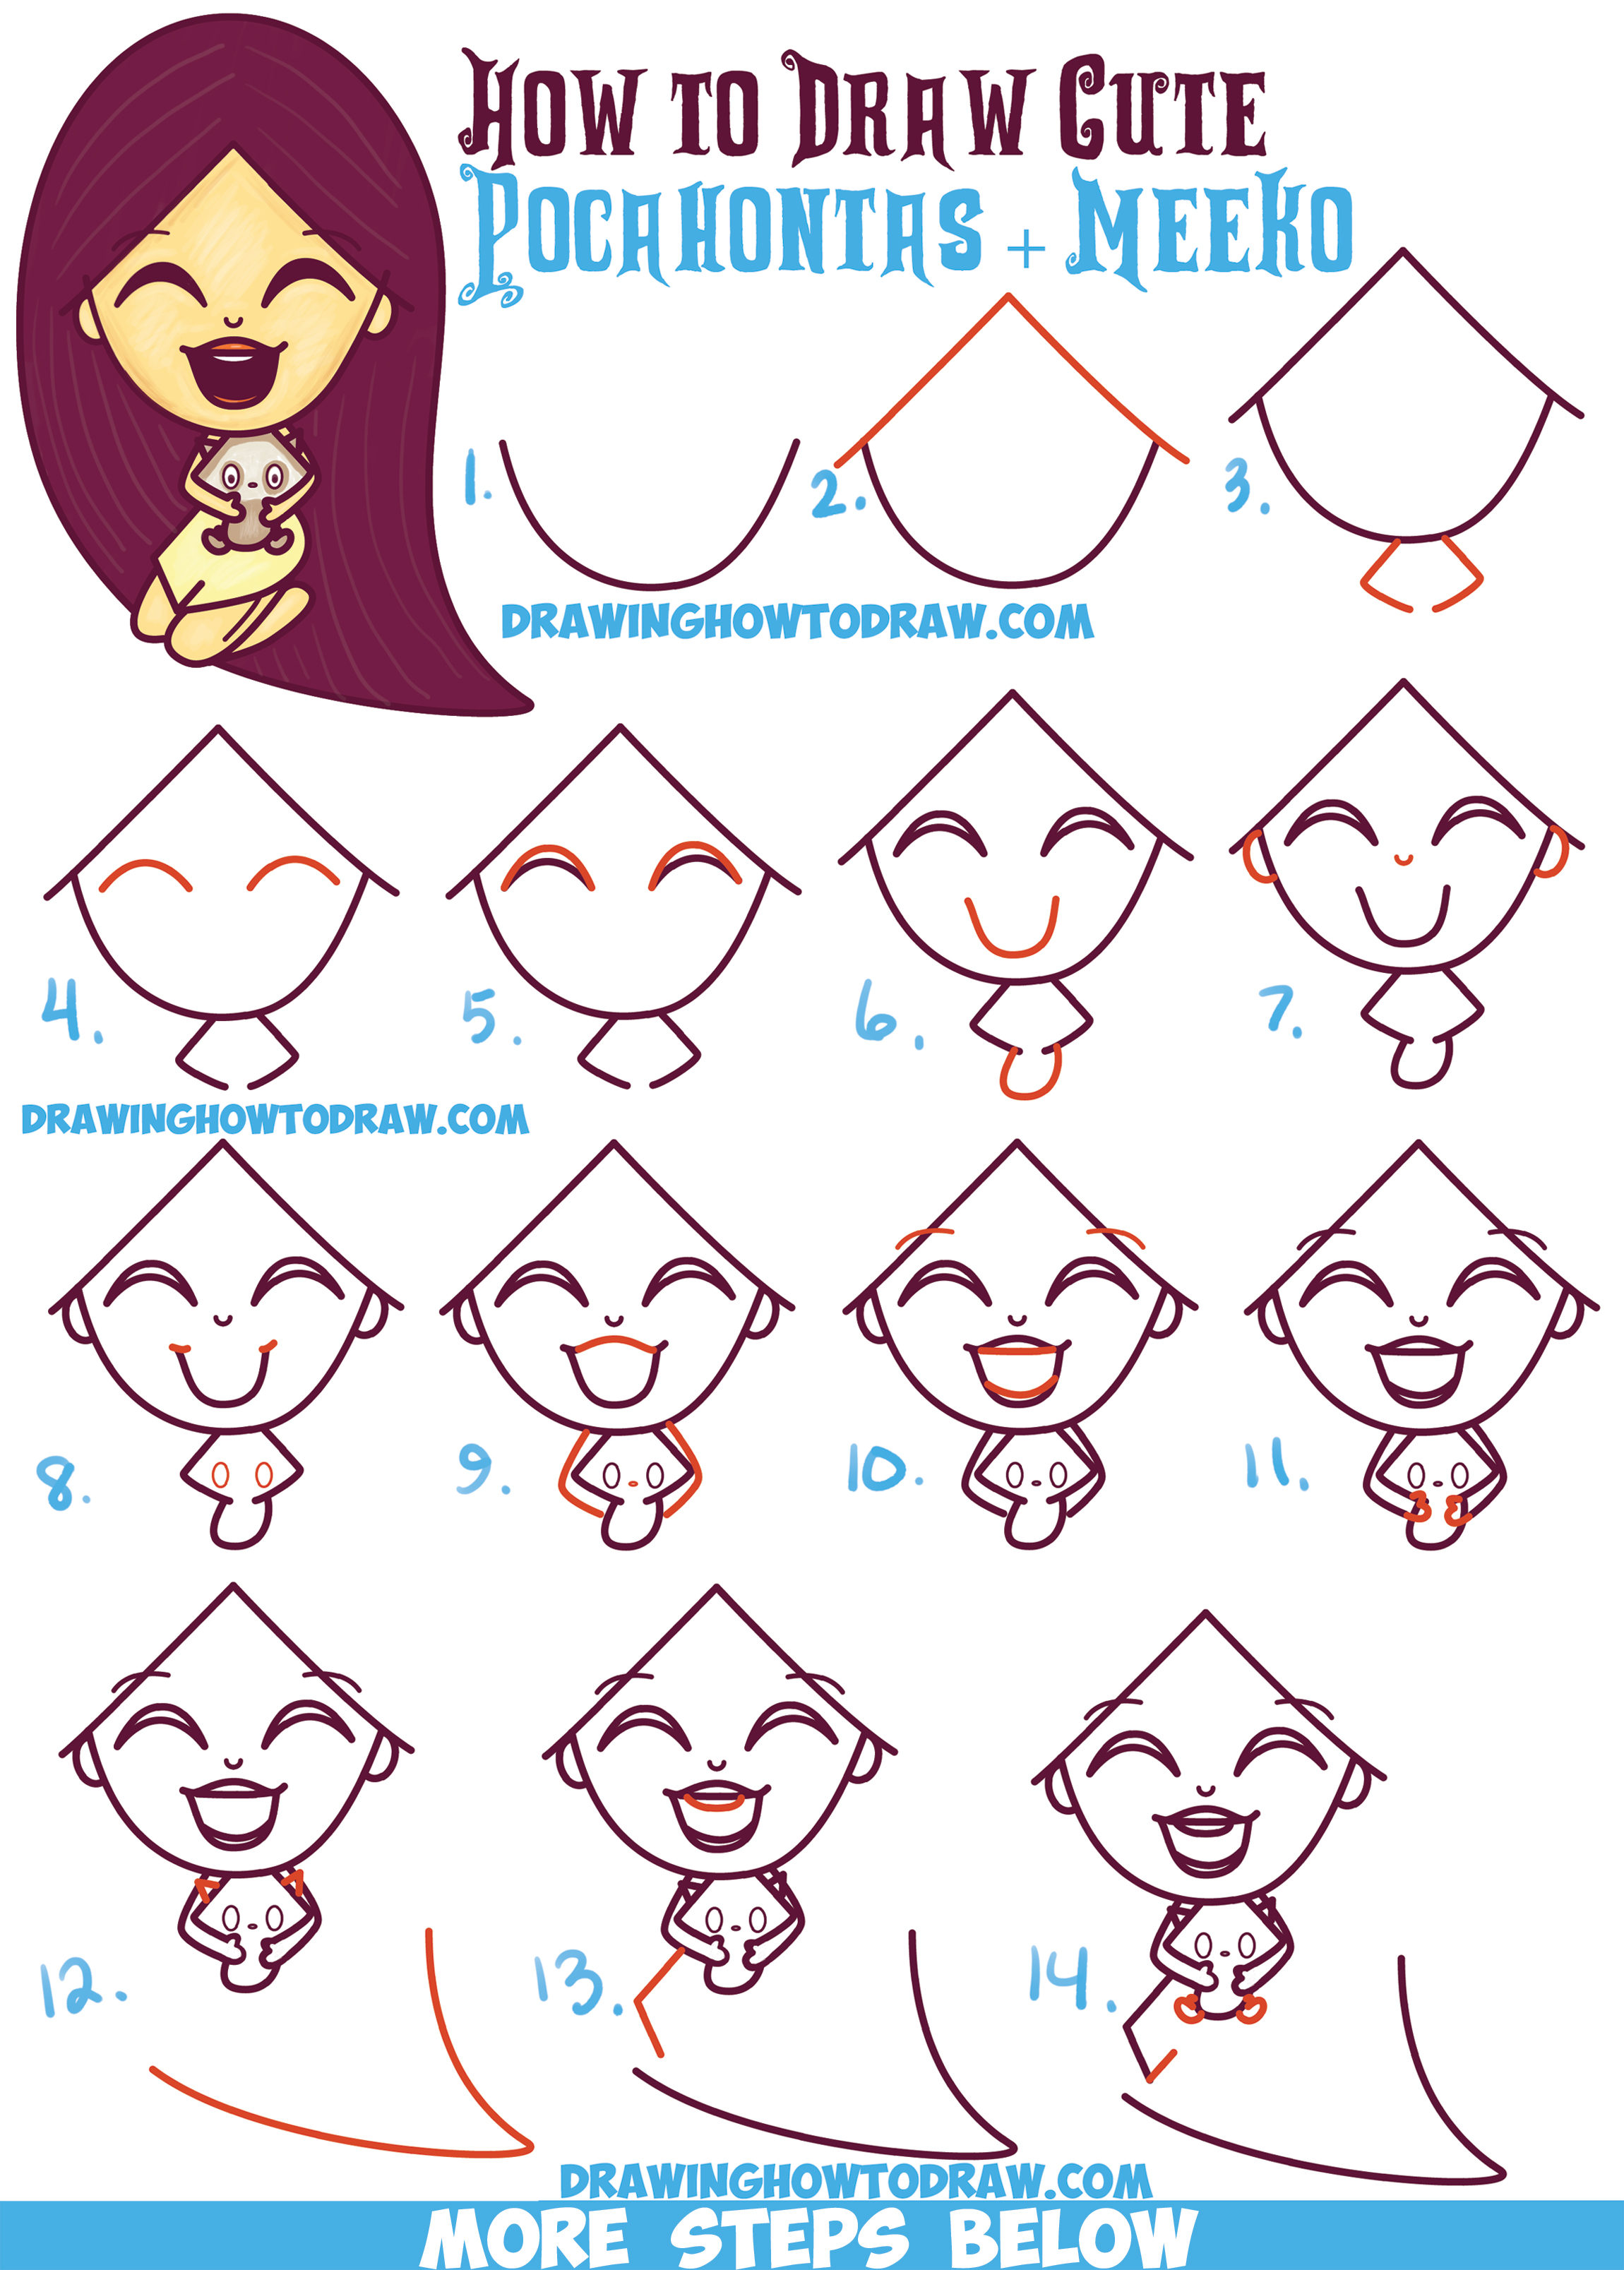 How to Draw a Cute Kawaii / Chibi Pocahontas and Meeko Easy Step by